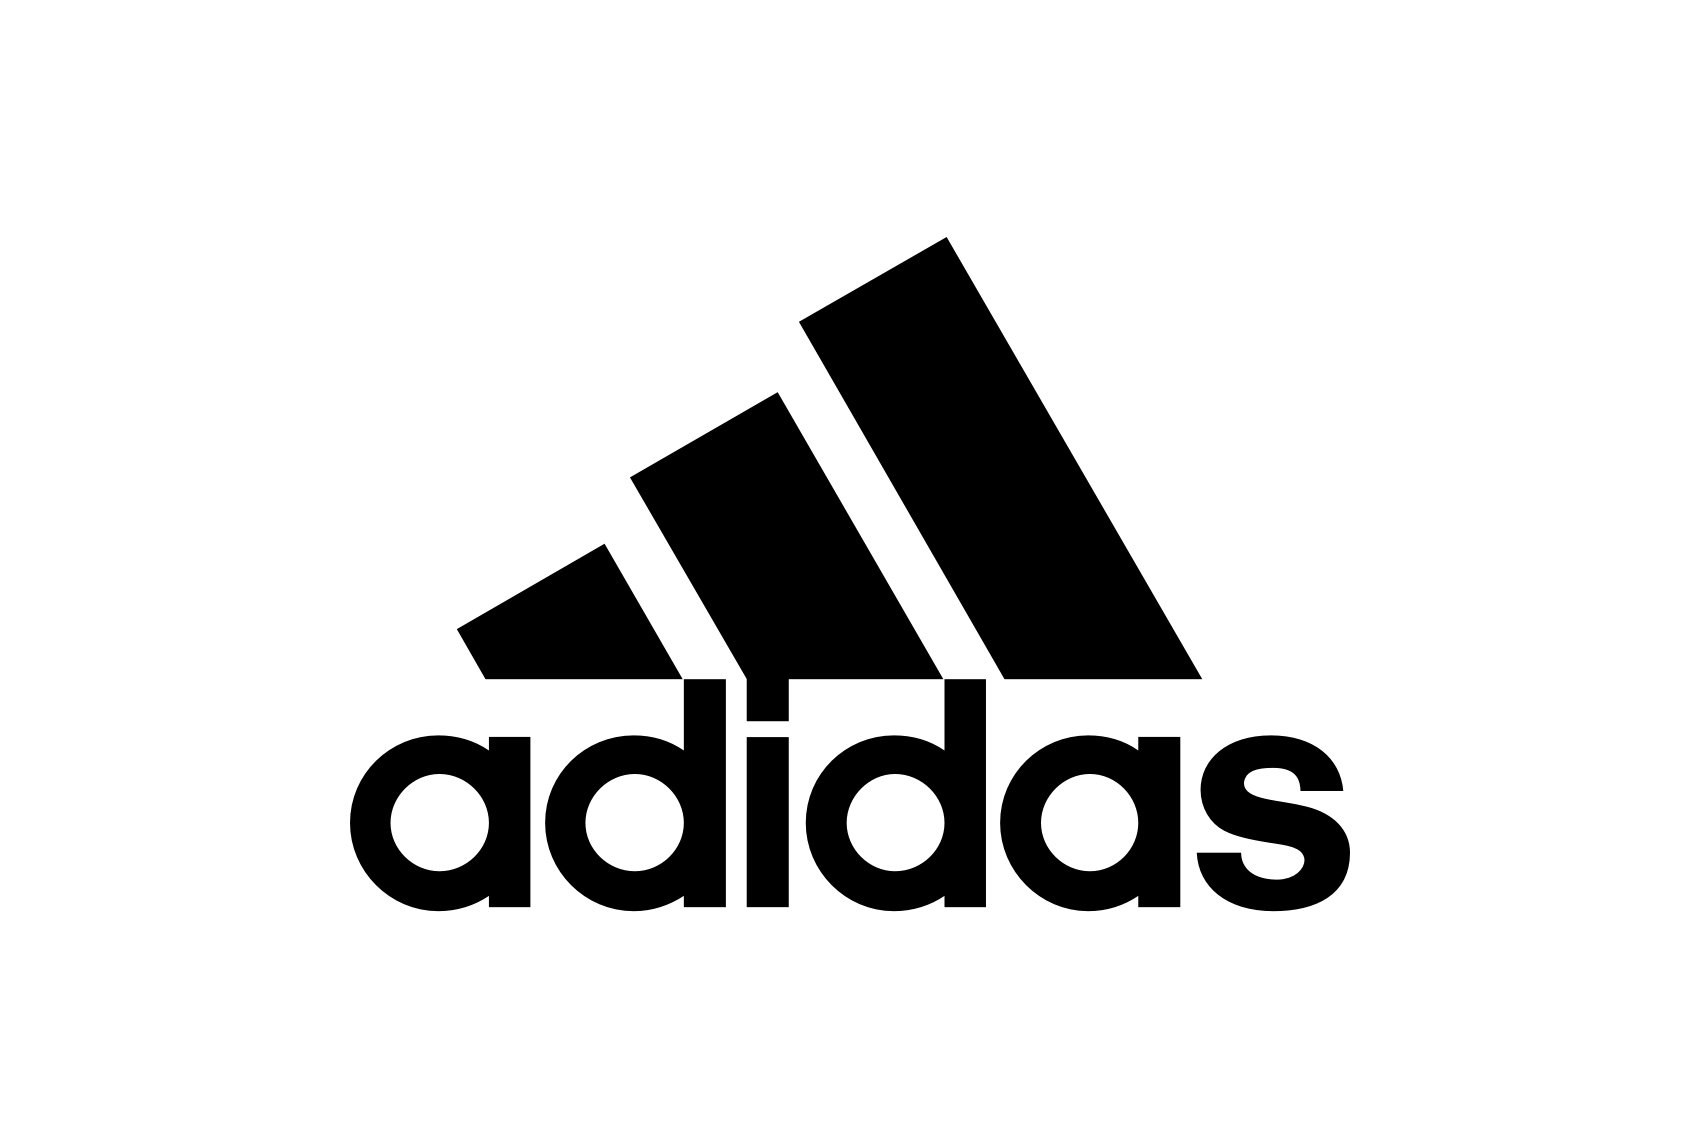 minimalist-logo-adidas